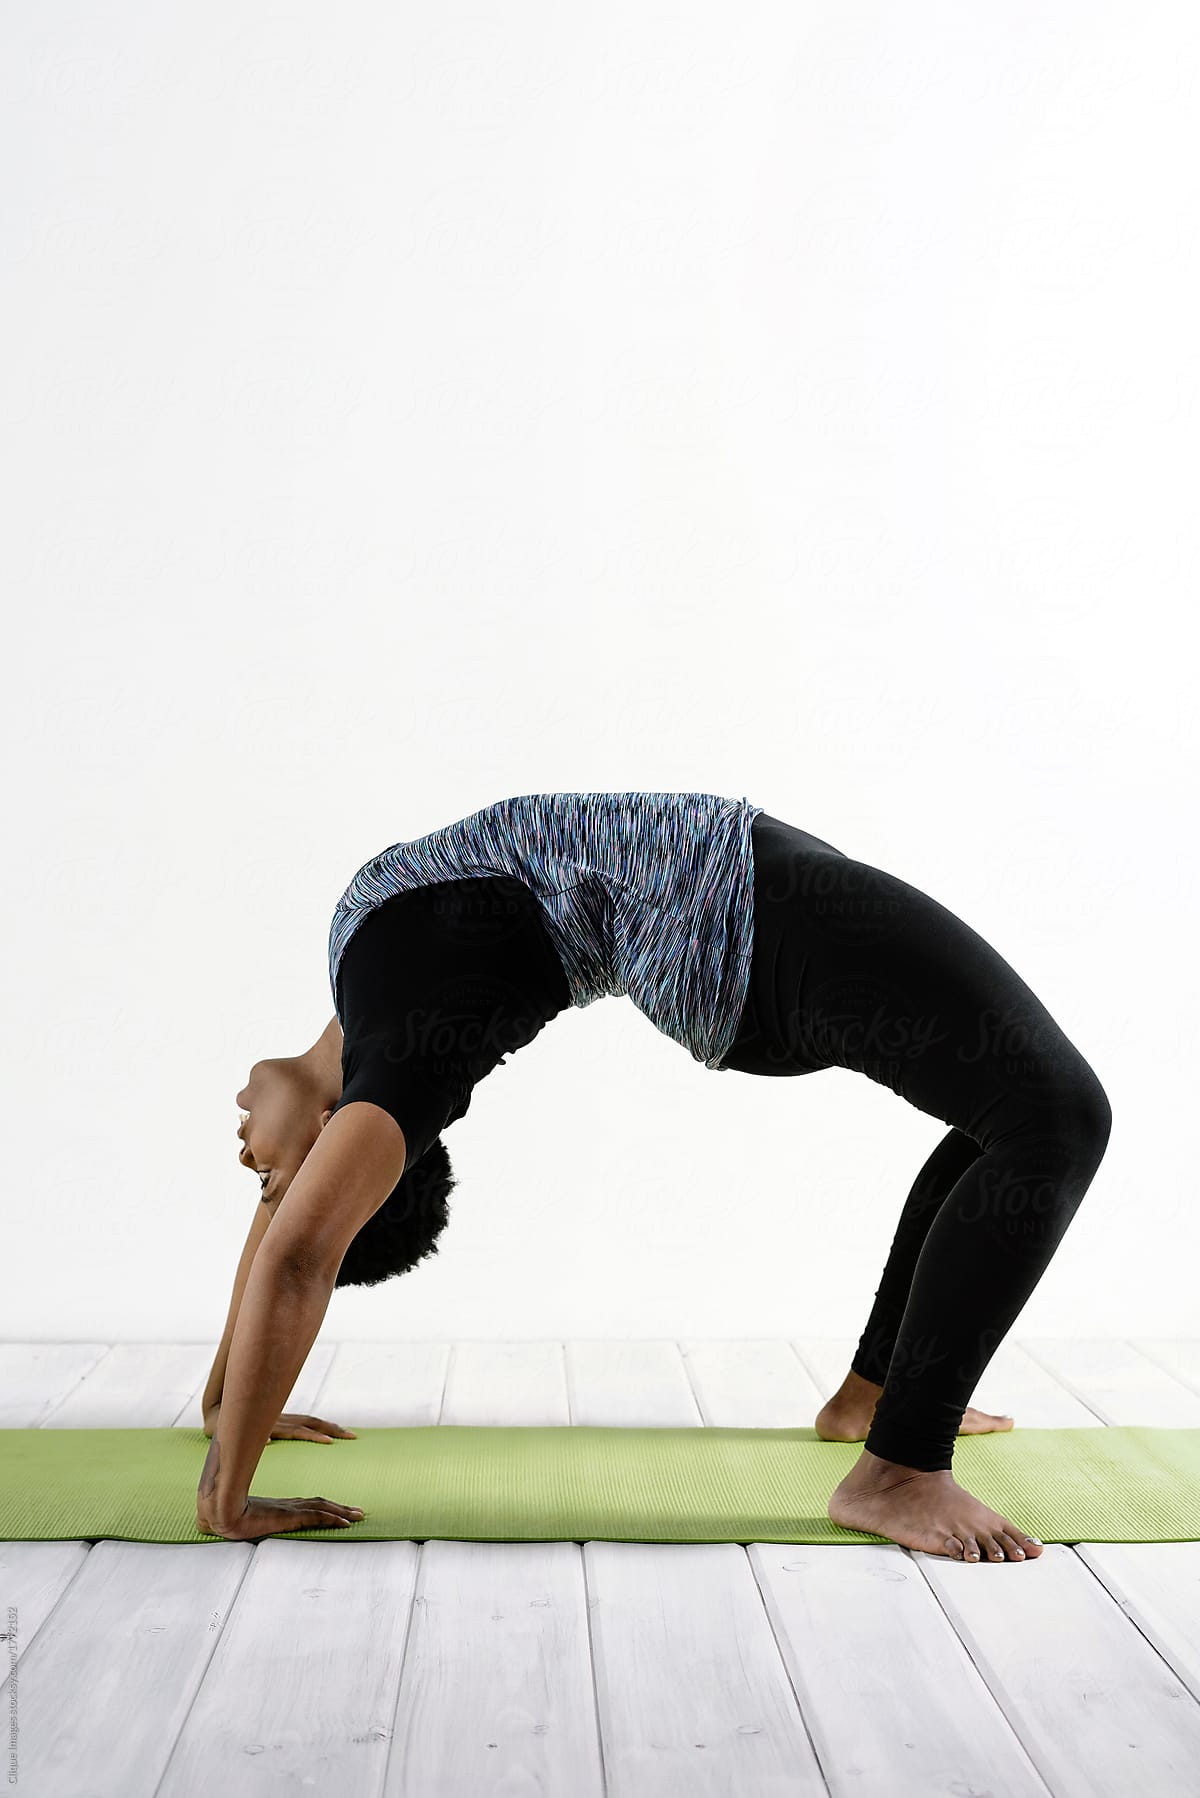 Plus-size Yogi Practicing Asana by Stocksy Contributor Clique Images -  Stocksy